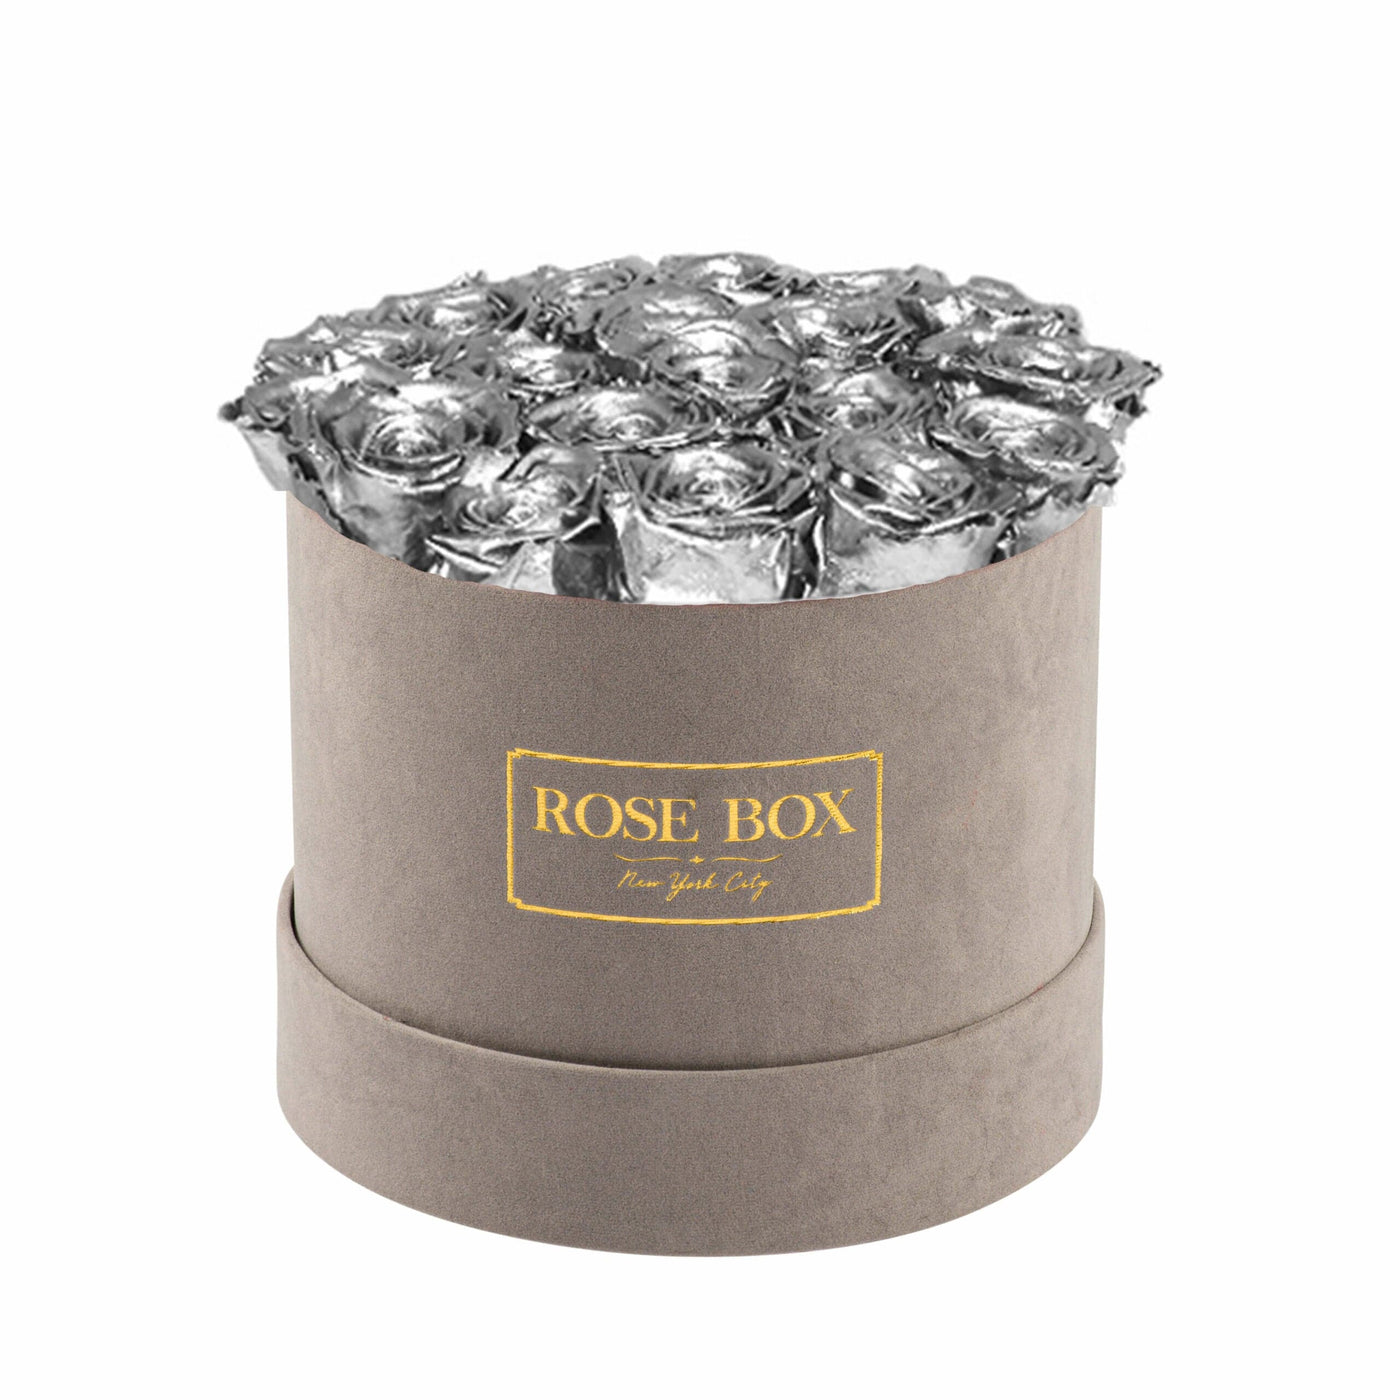 Medium Gray Box with Silver Roses